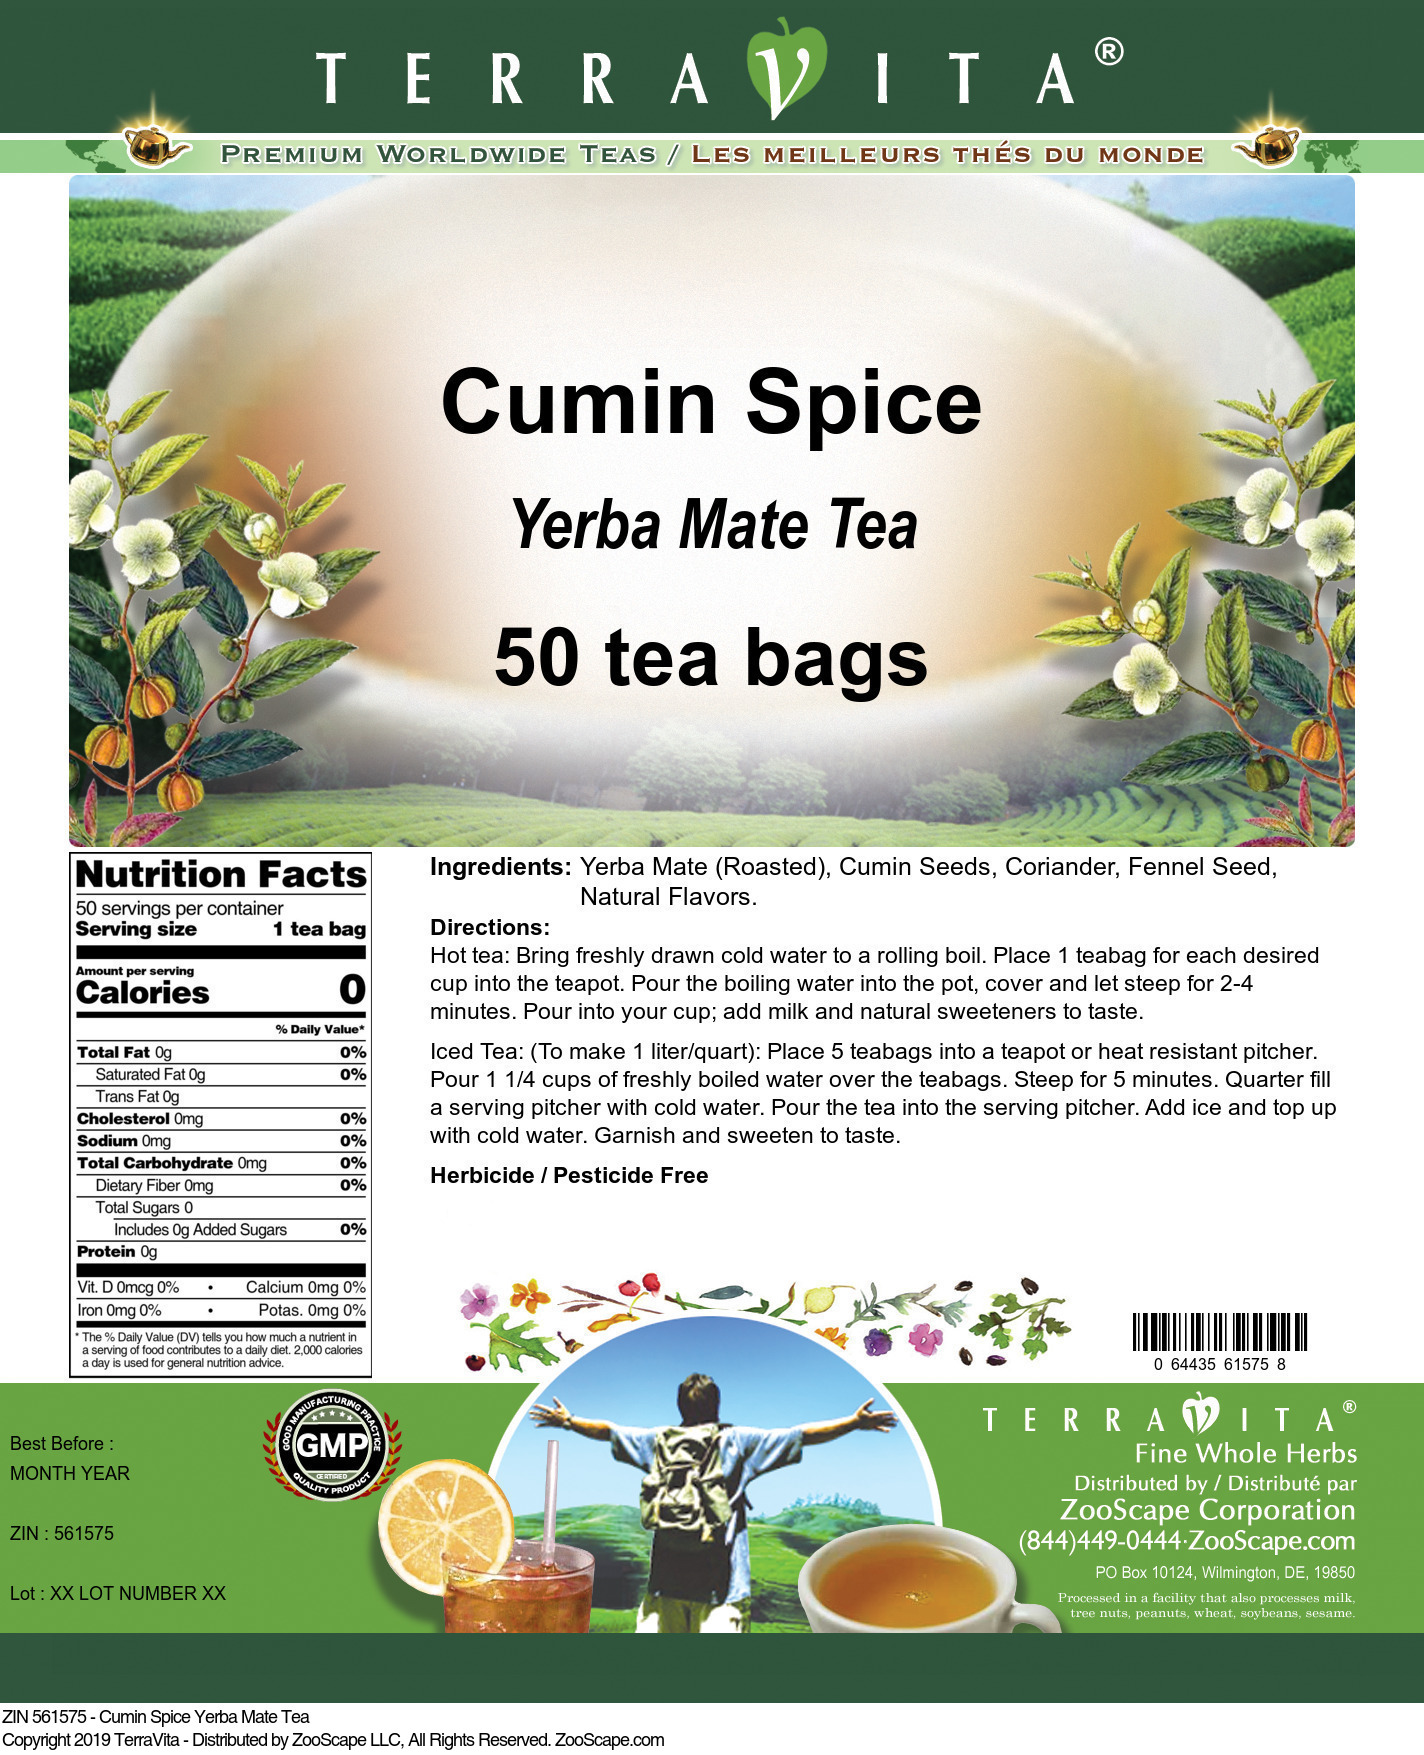 Cumin Spice Yerba Mate Tea - Label